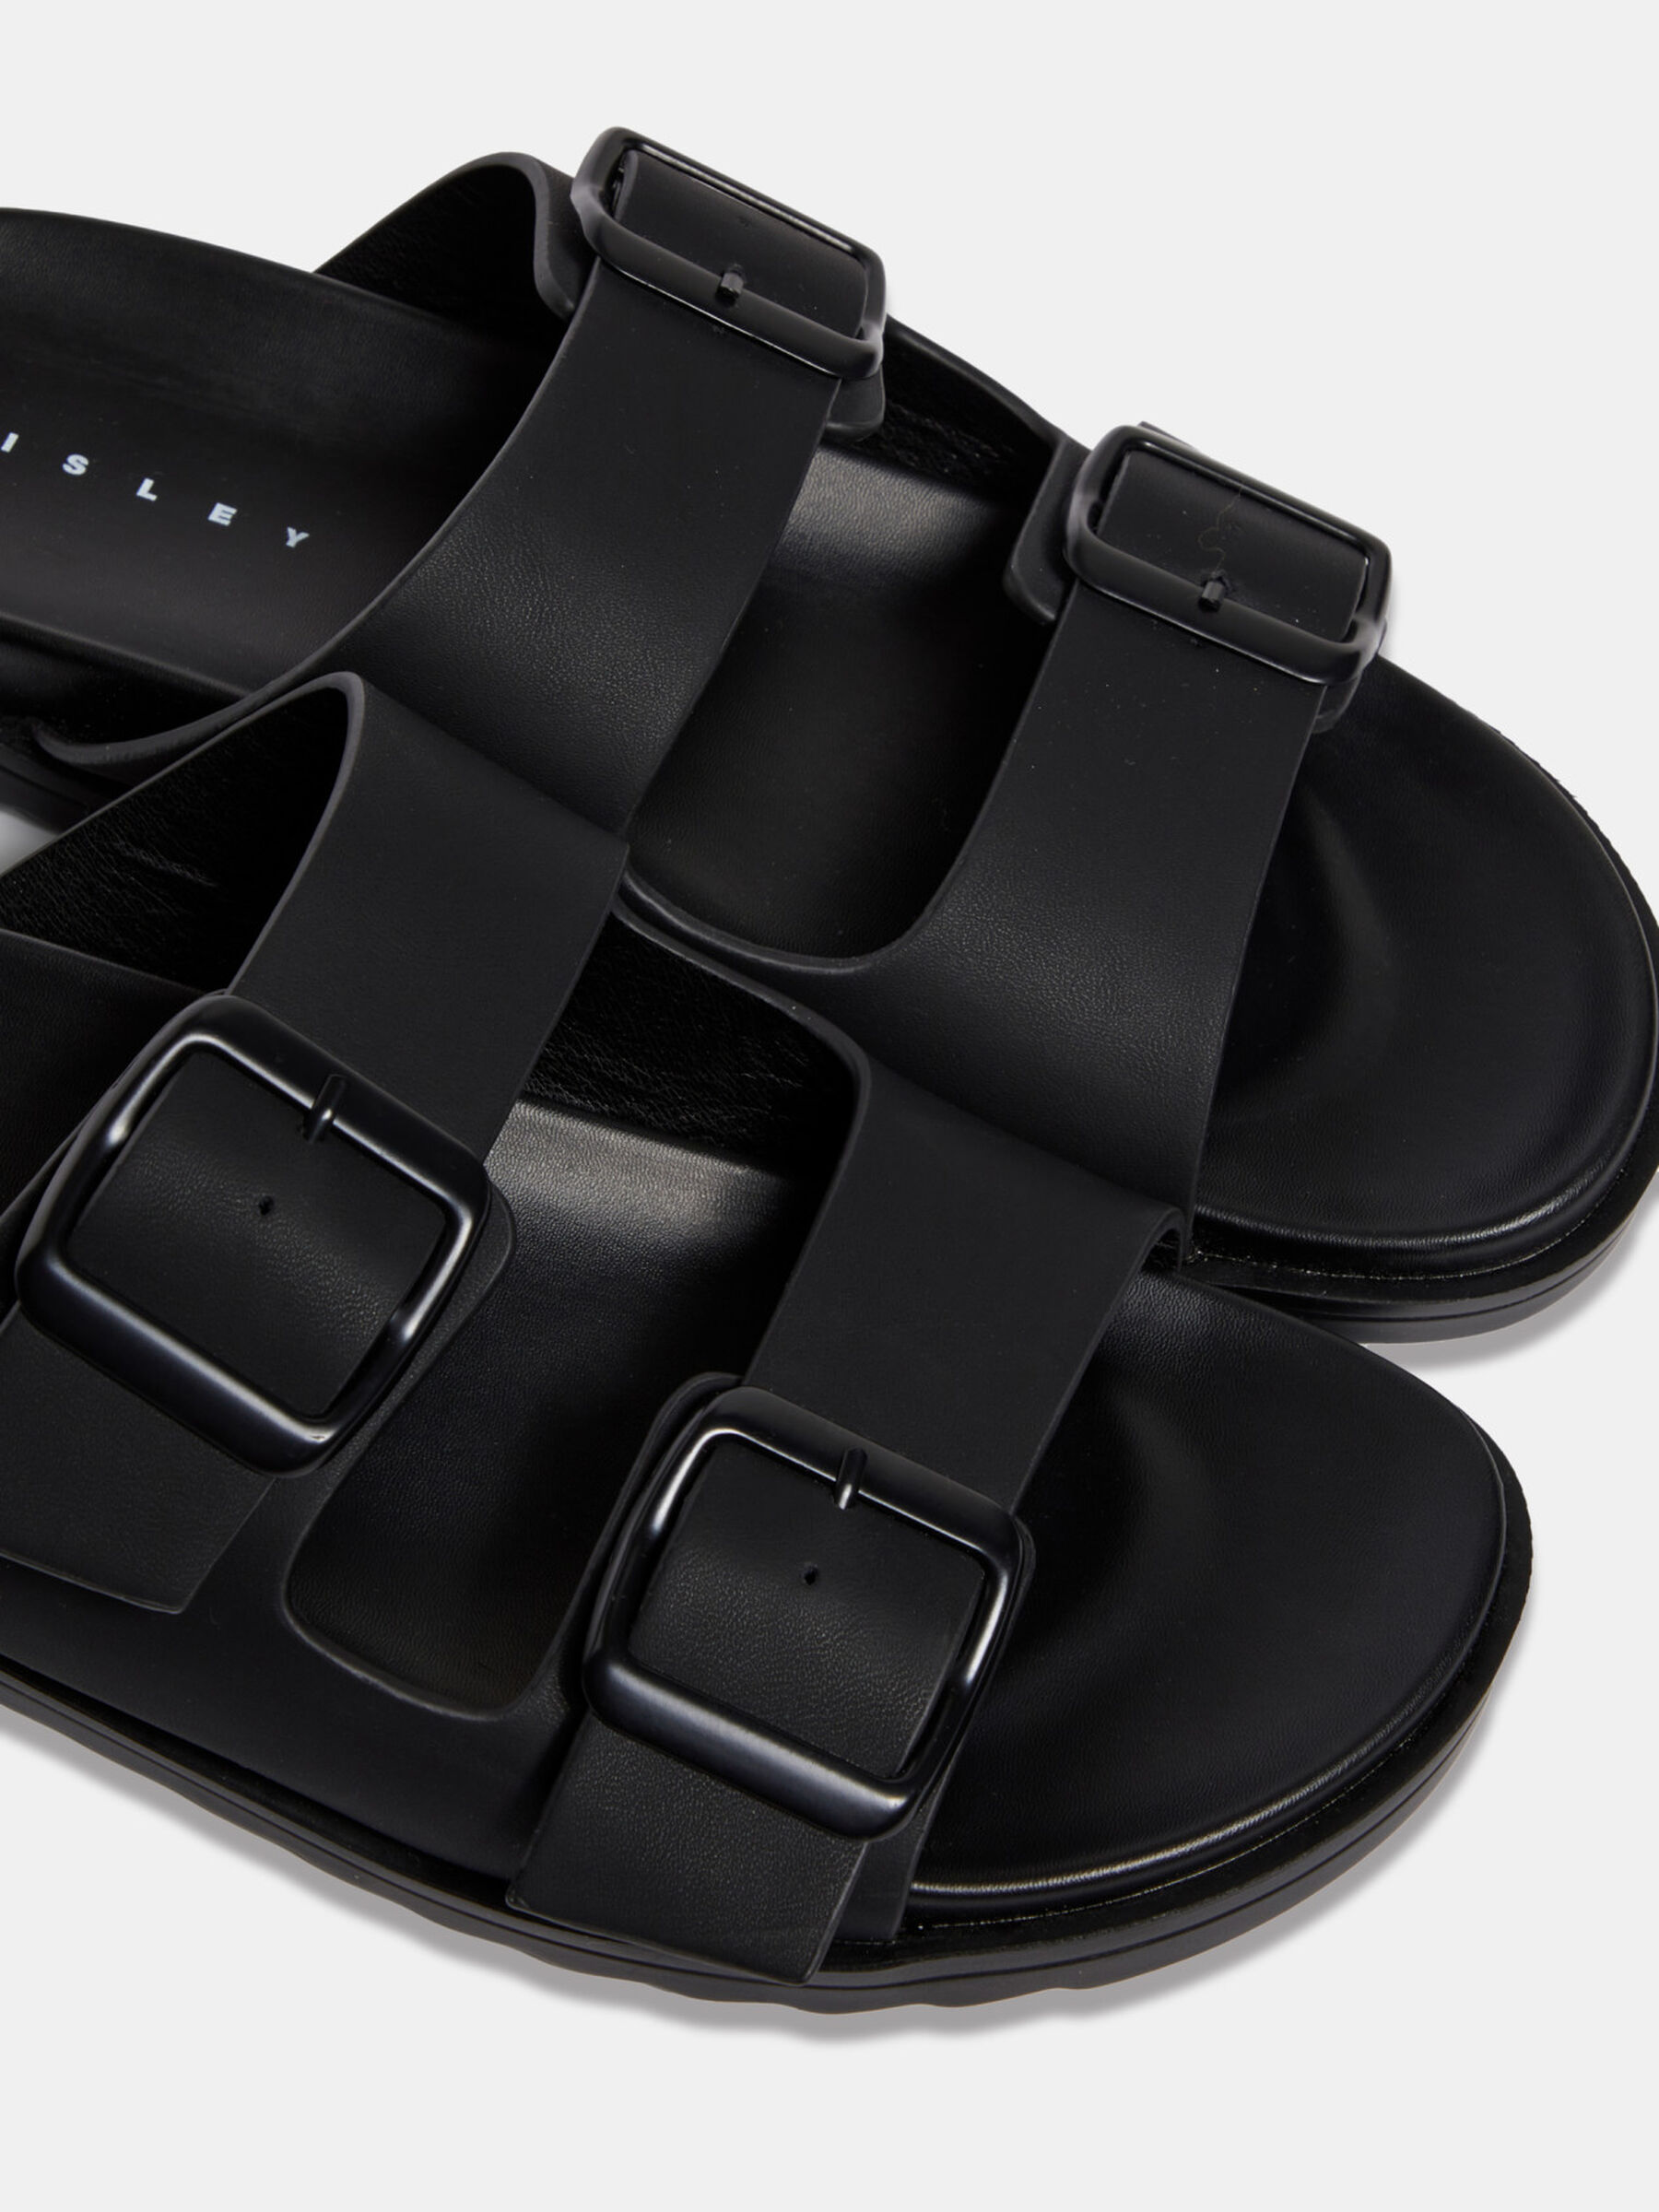 Thong sandals, Black - Sisley